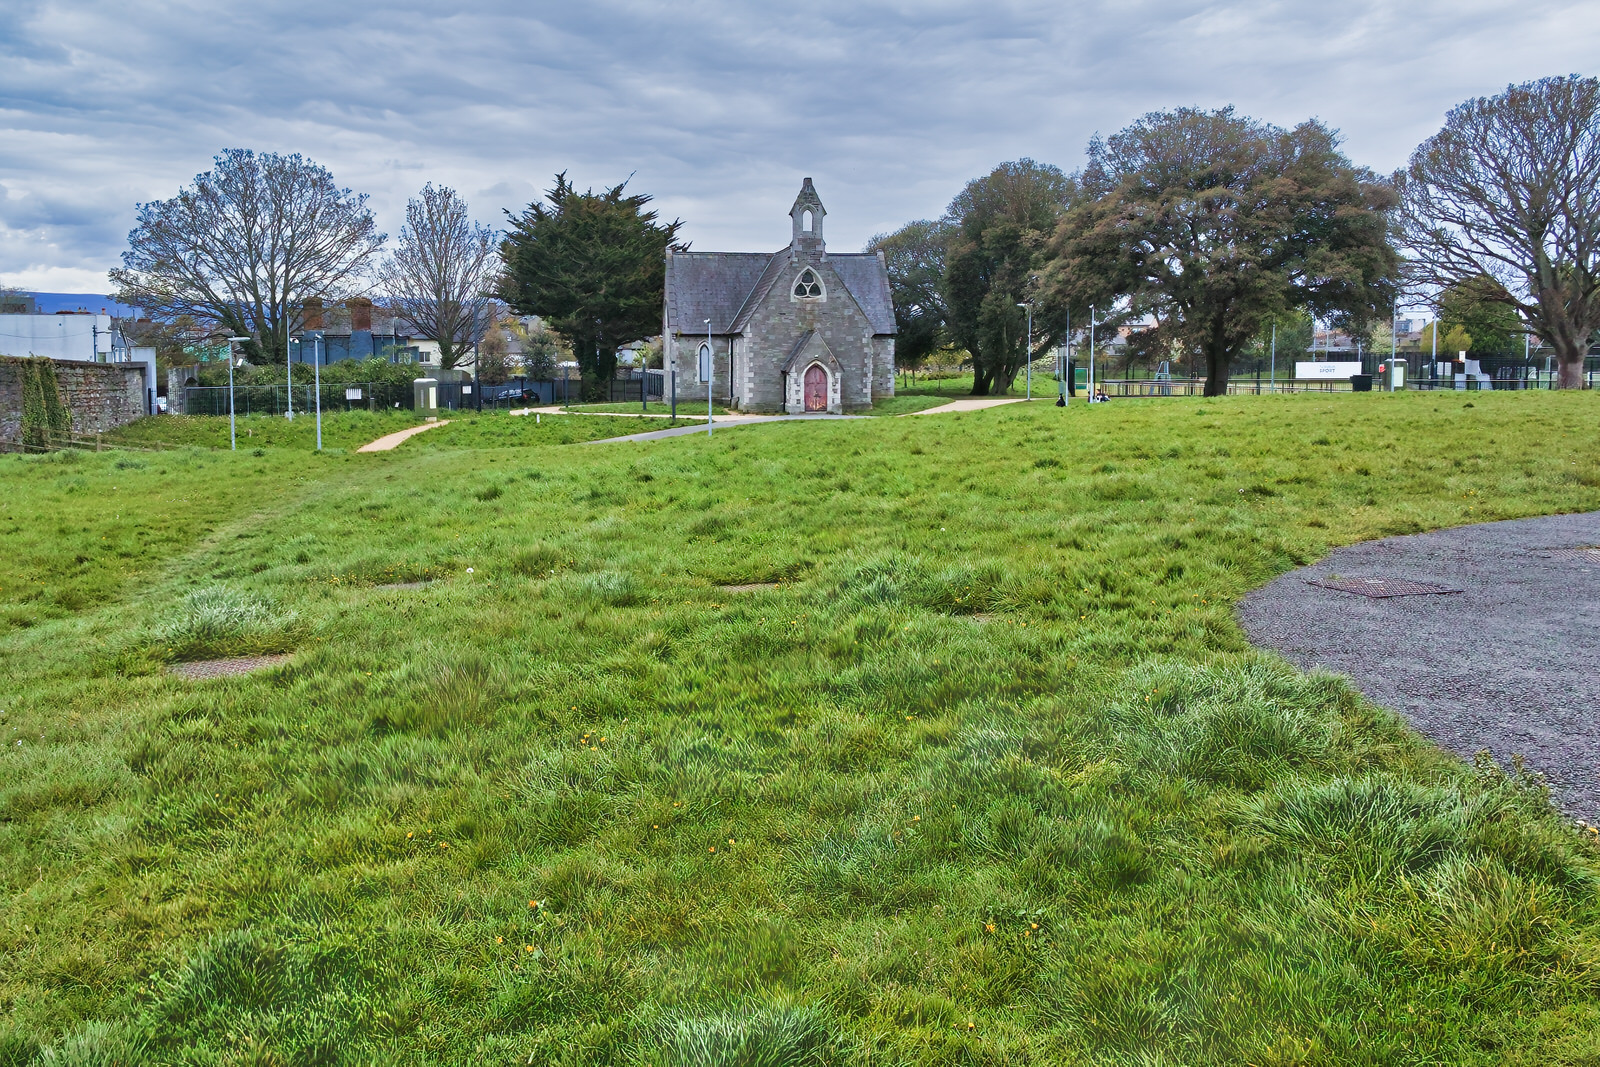 UNUSED CHURCH OF IRELAND CHURCH ON THE NEW TU GRANGEGORMAN CAMPUS 